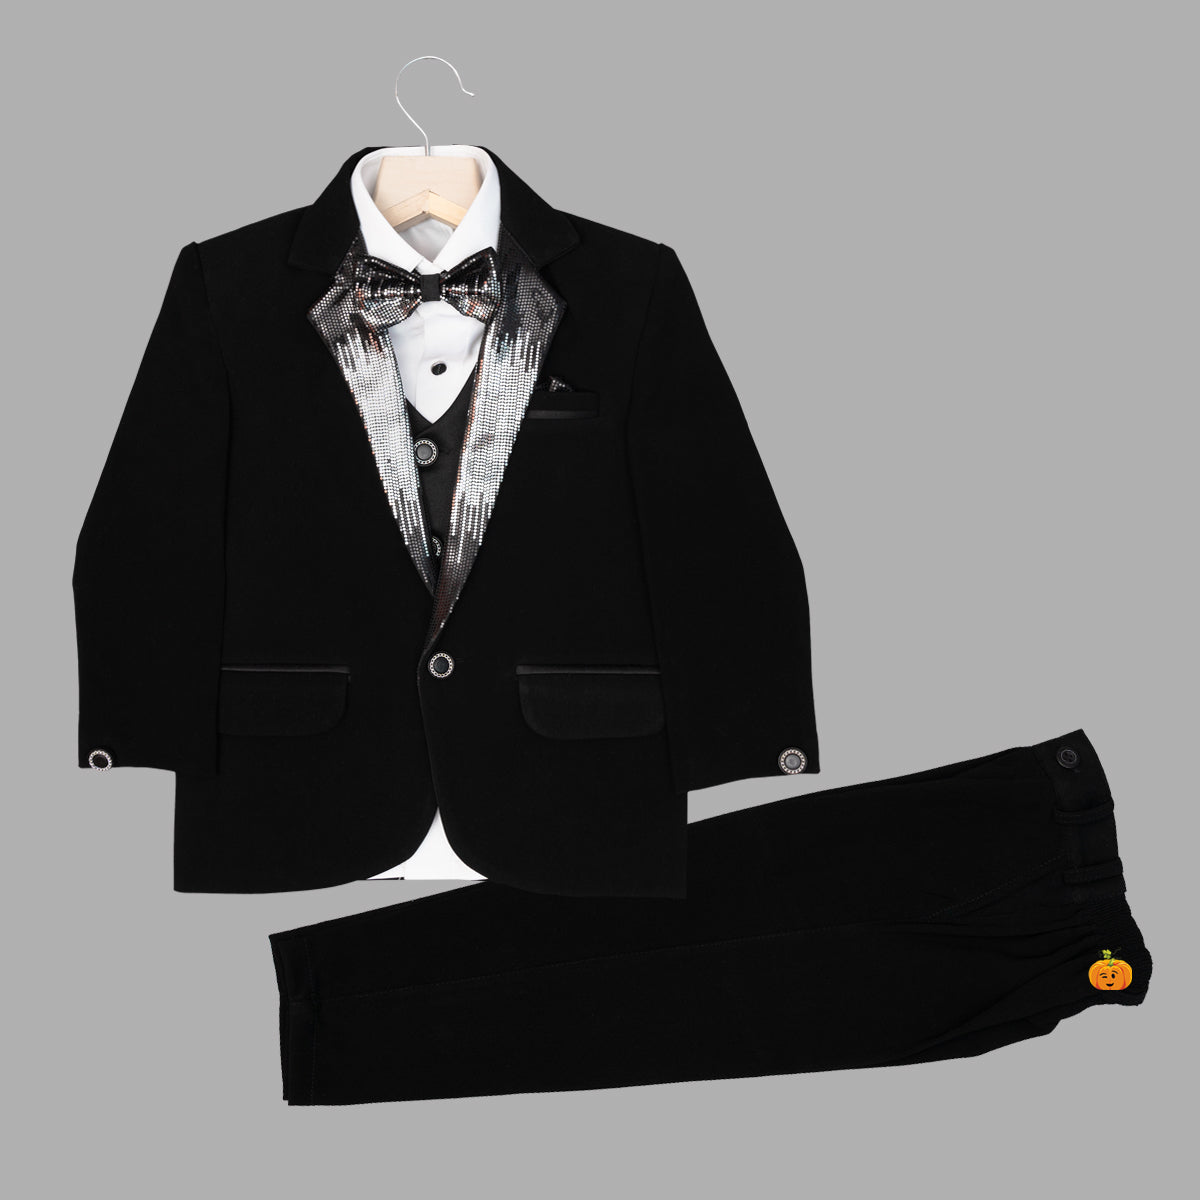 Share 241+ tuxedo suit for kids latest